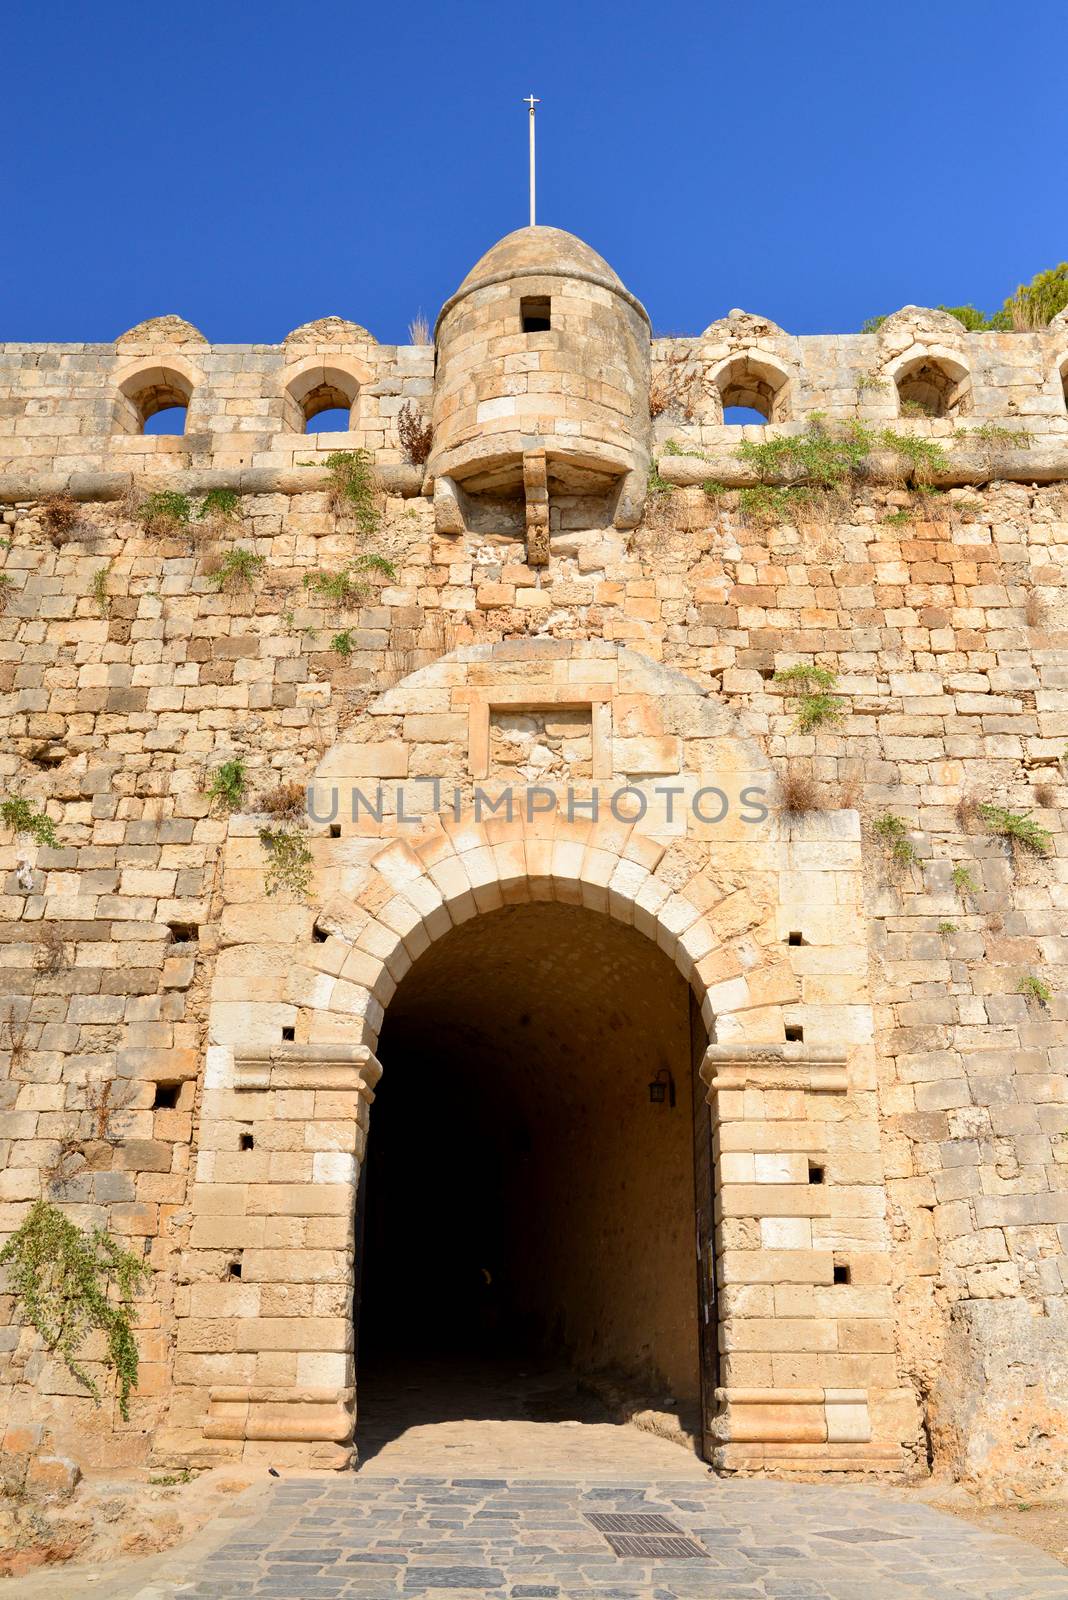 Rethymno Fortezza gate by tony4urban